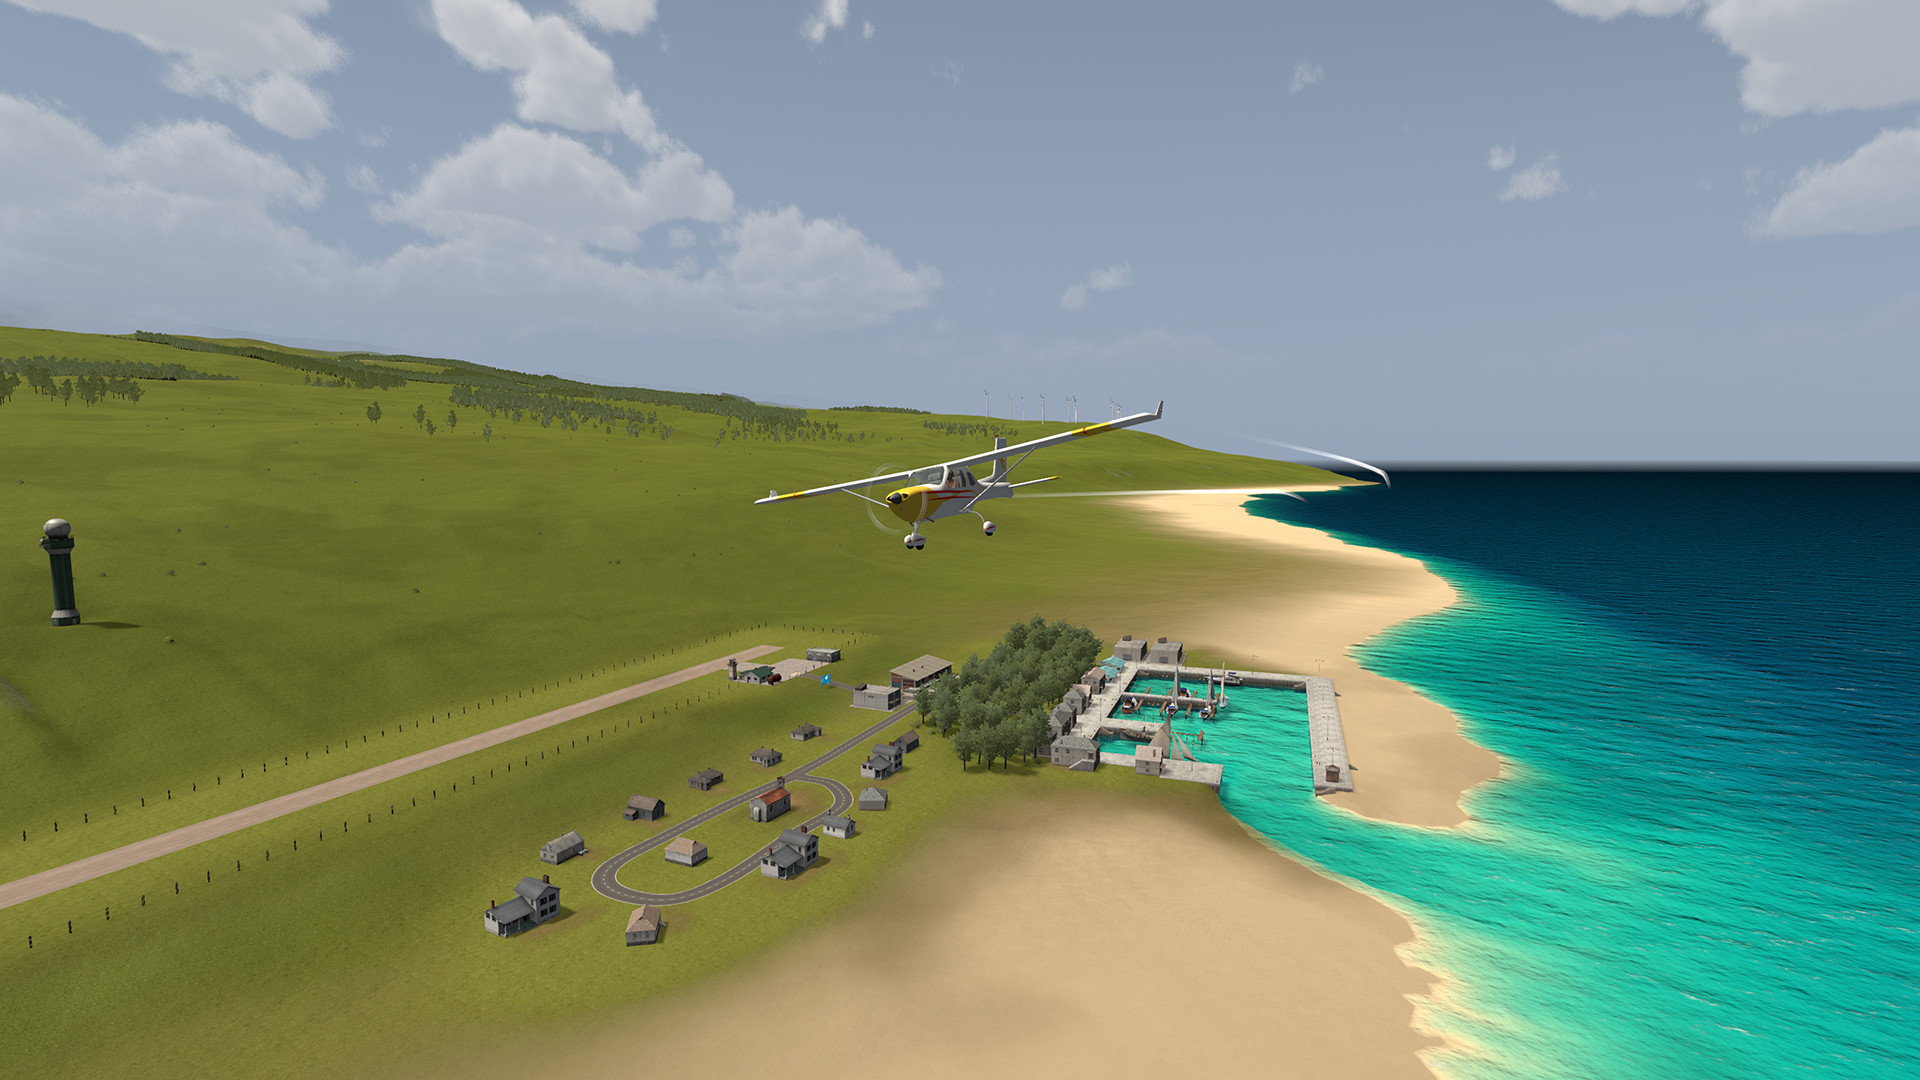 download Coastline Flight Simulator via torrent